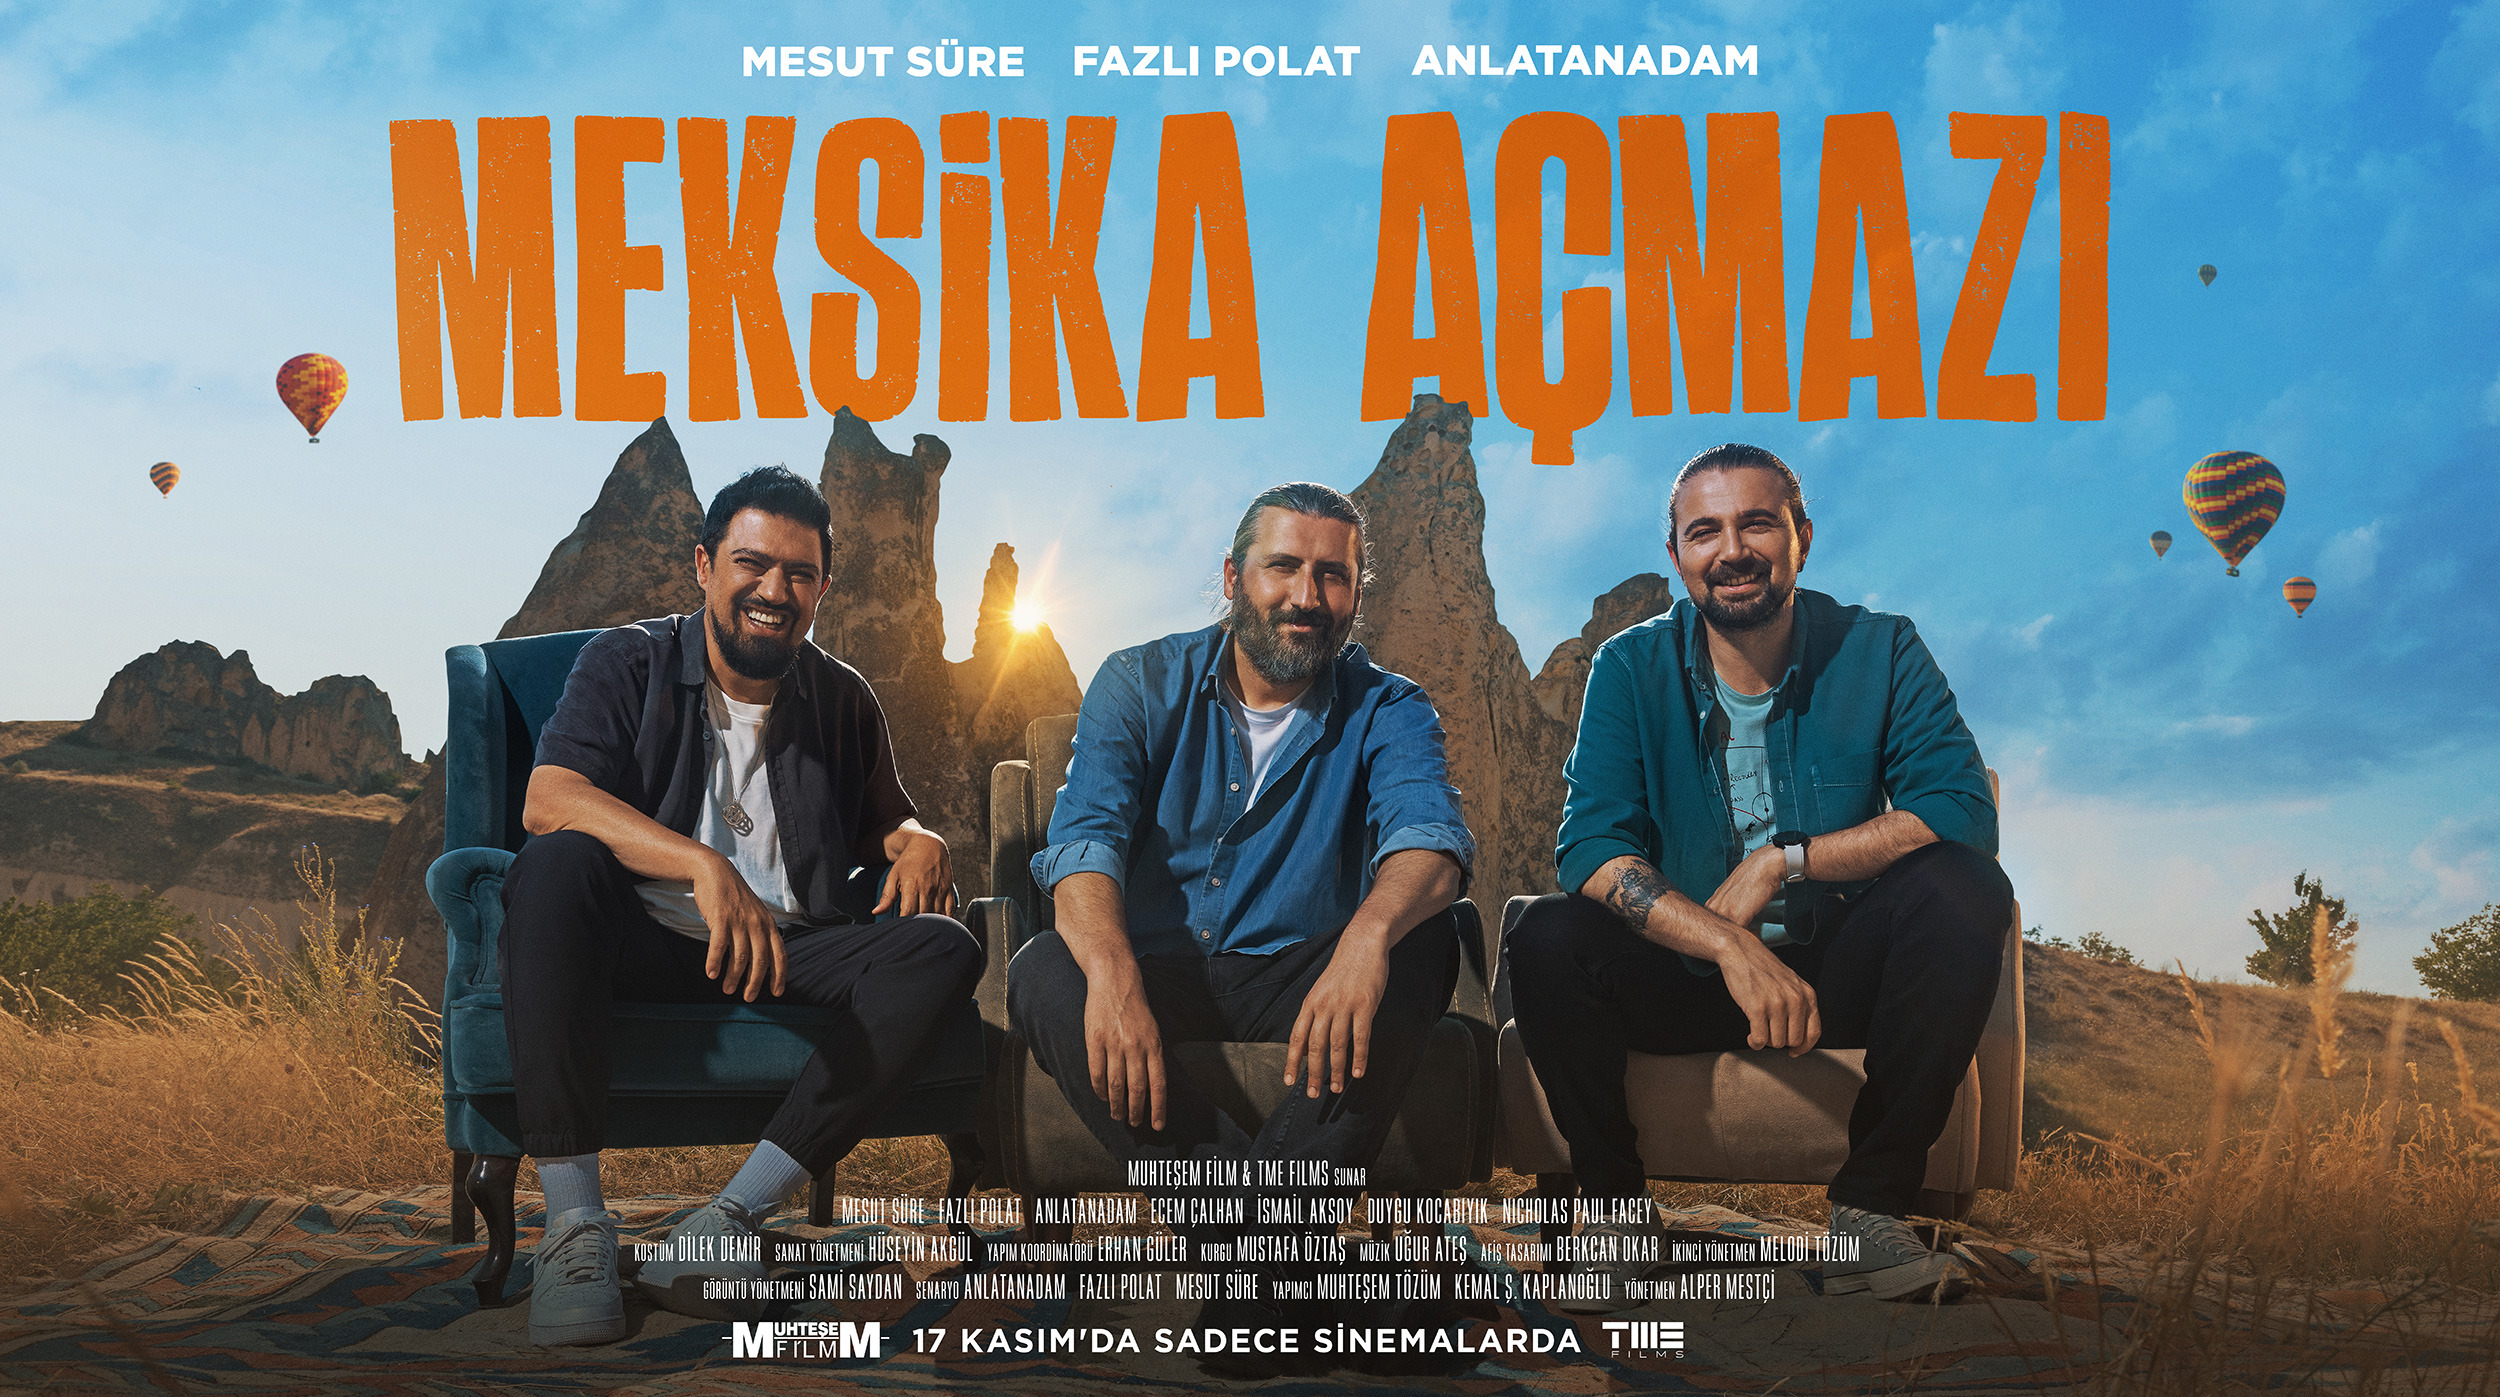 Mega Sized Movie Poster Image for Meksika Açmazi (#6 of 6)